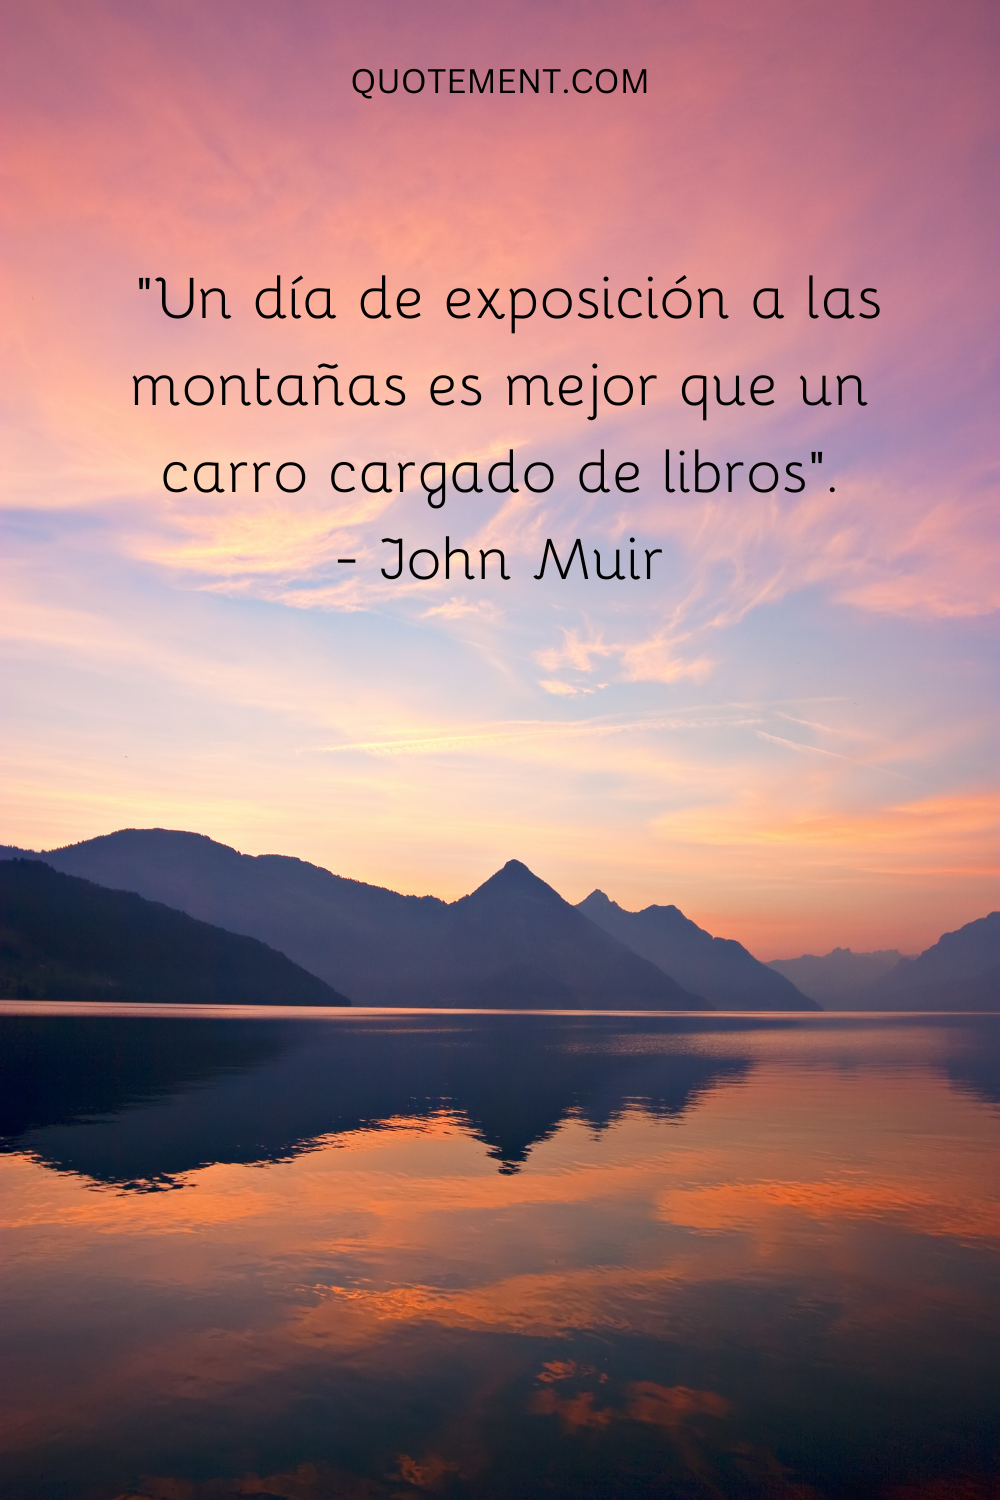 "Un día de exposición a las montañas es mejor que un montón de libros". - John Muir